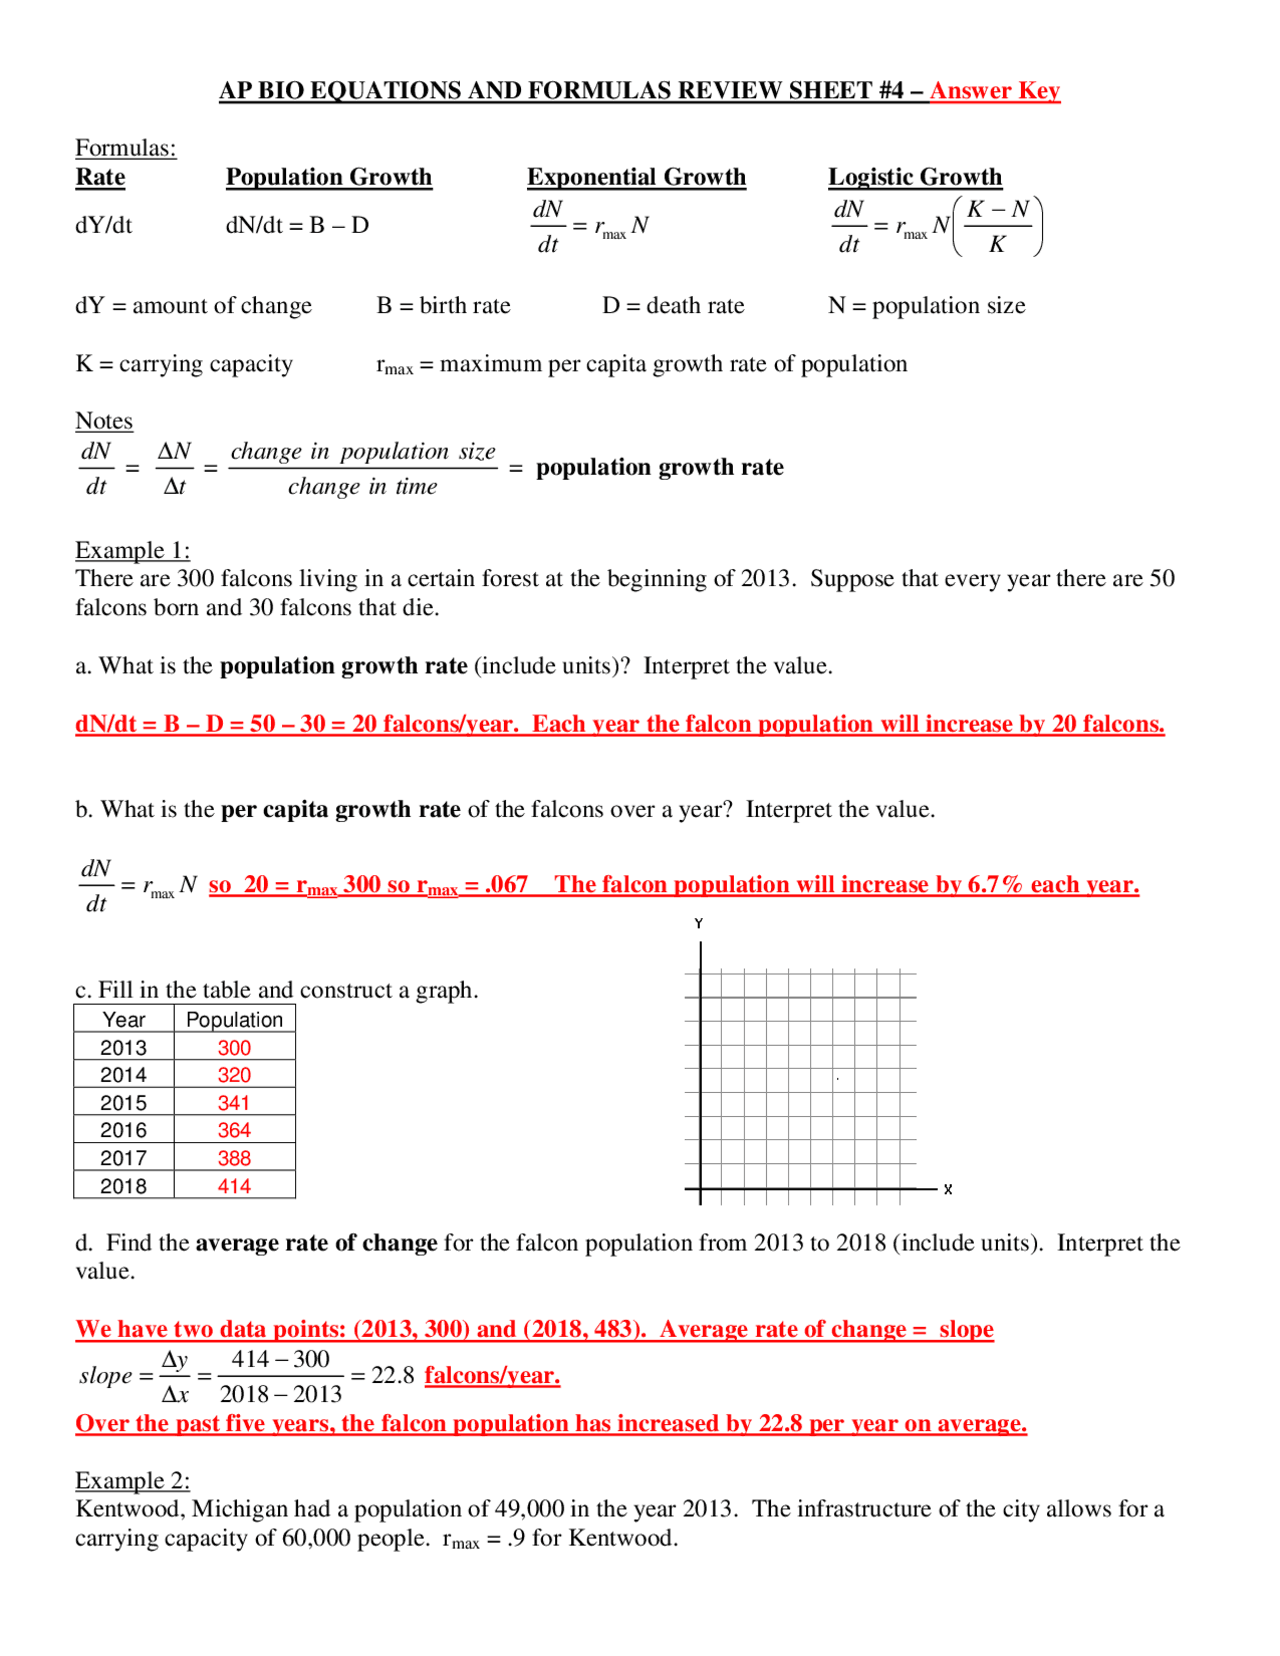 AP Bio Equations And Formulas Review Sheet Cheat Sheet Biology Docsity Math Worksheet Answers